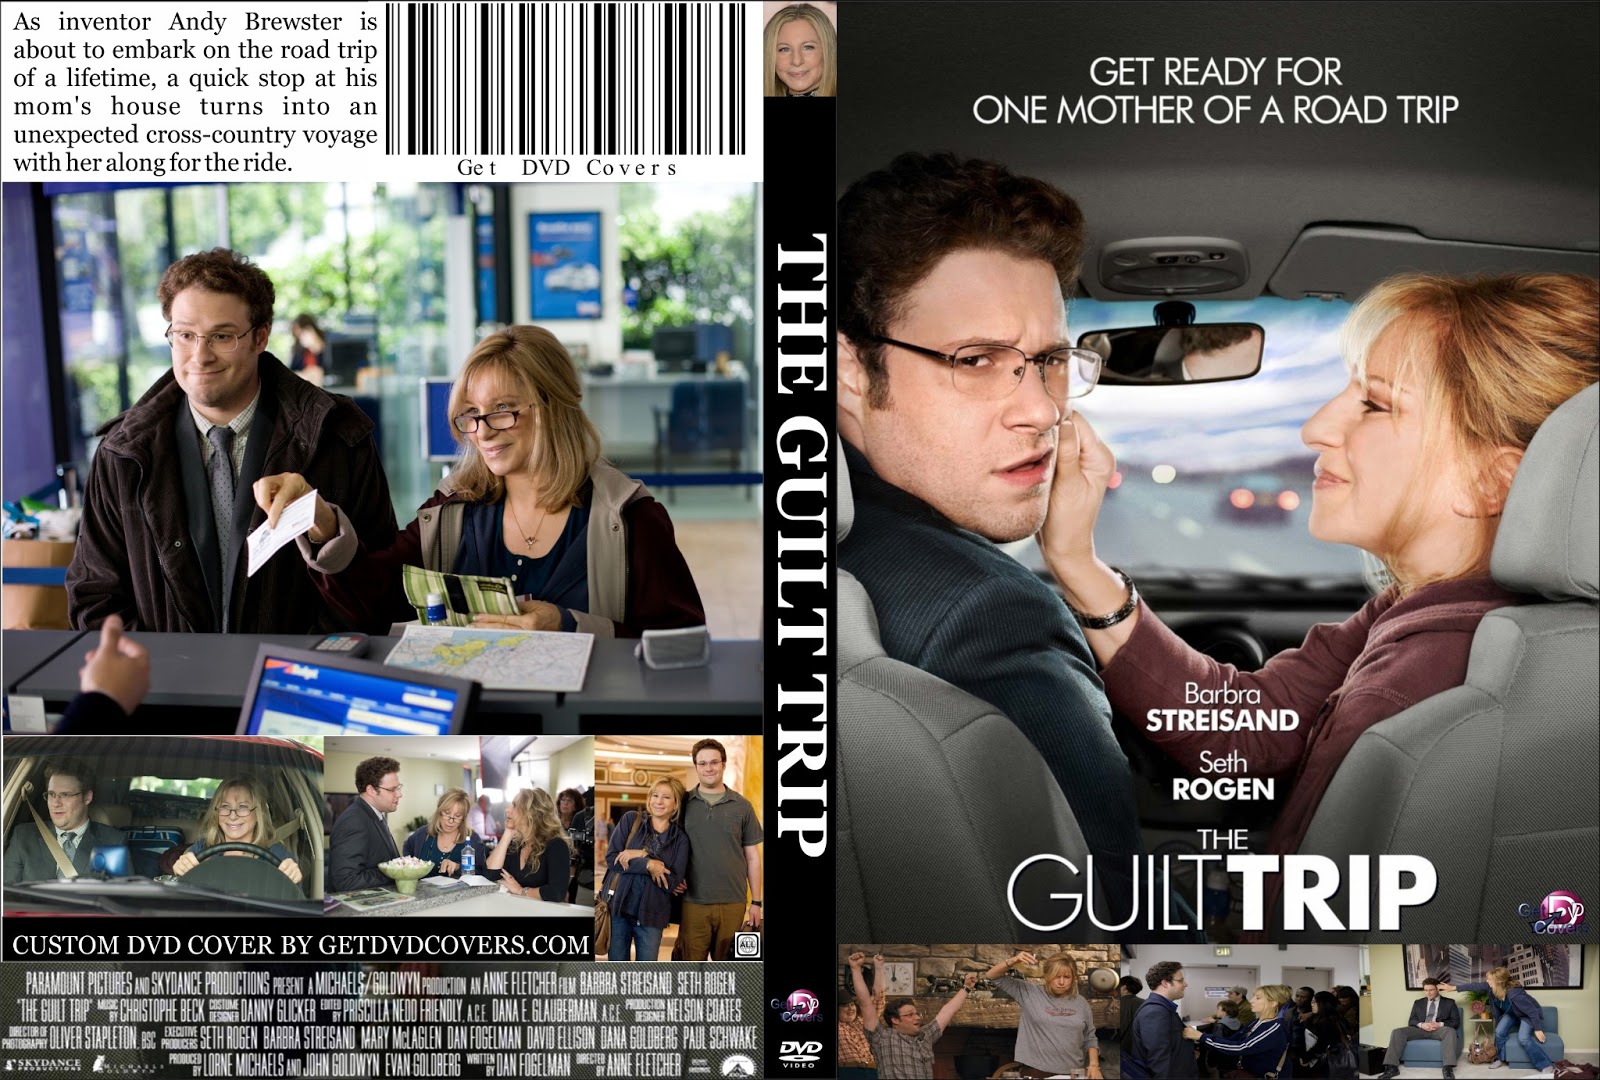 Guilt trip. Guilt trip Band. Undercover Bridesmaid 2012. Guilt trip Cover. Along here